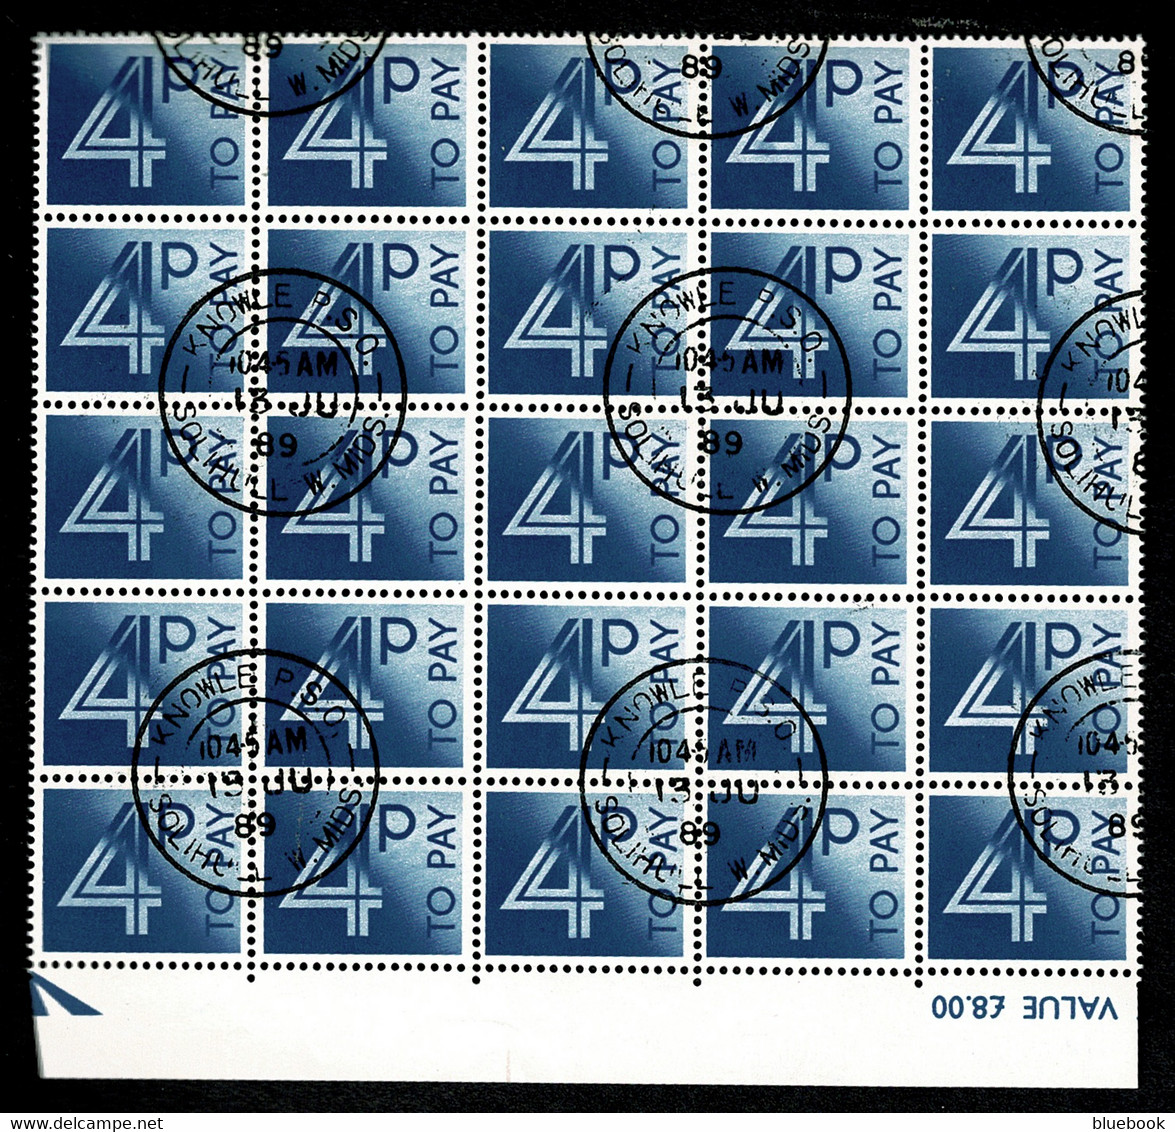 Ref 1565 - GB QEII - 4p Postage Due - Rare Used Marginal Block Of 25 Stamps - Postage Due